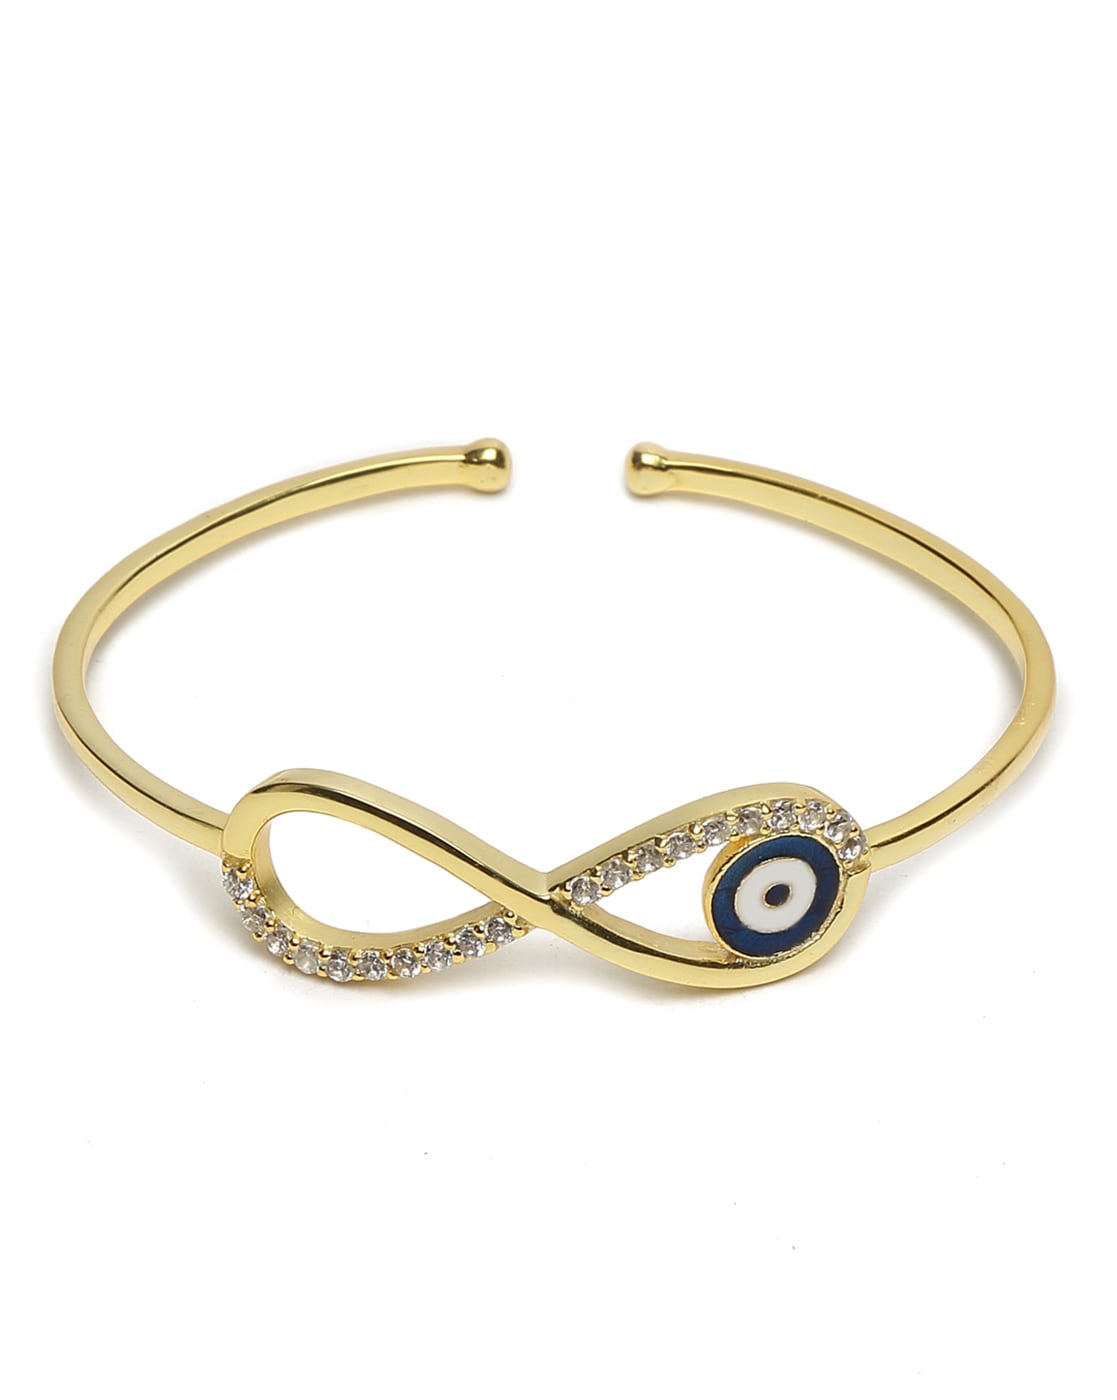 Buy GoldToned Bracelets  Bangles for Women by EK Online  Ajiocom